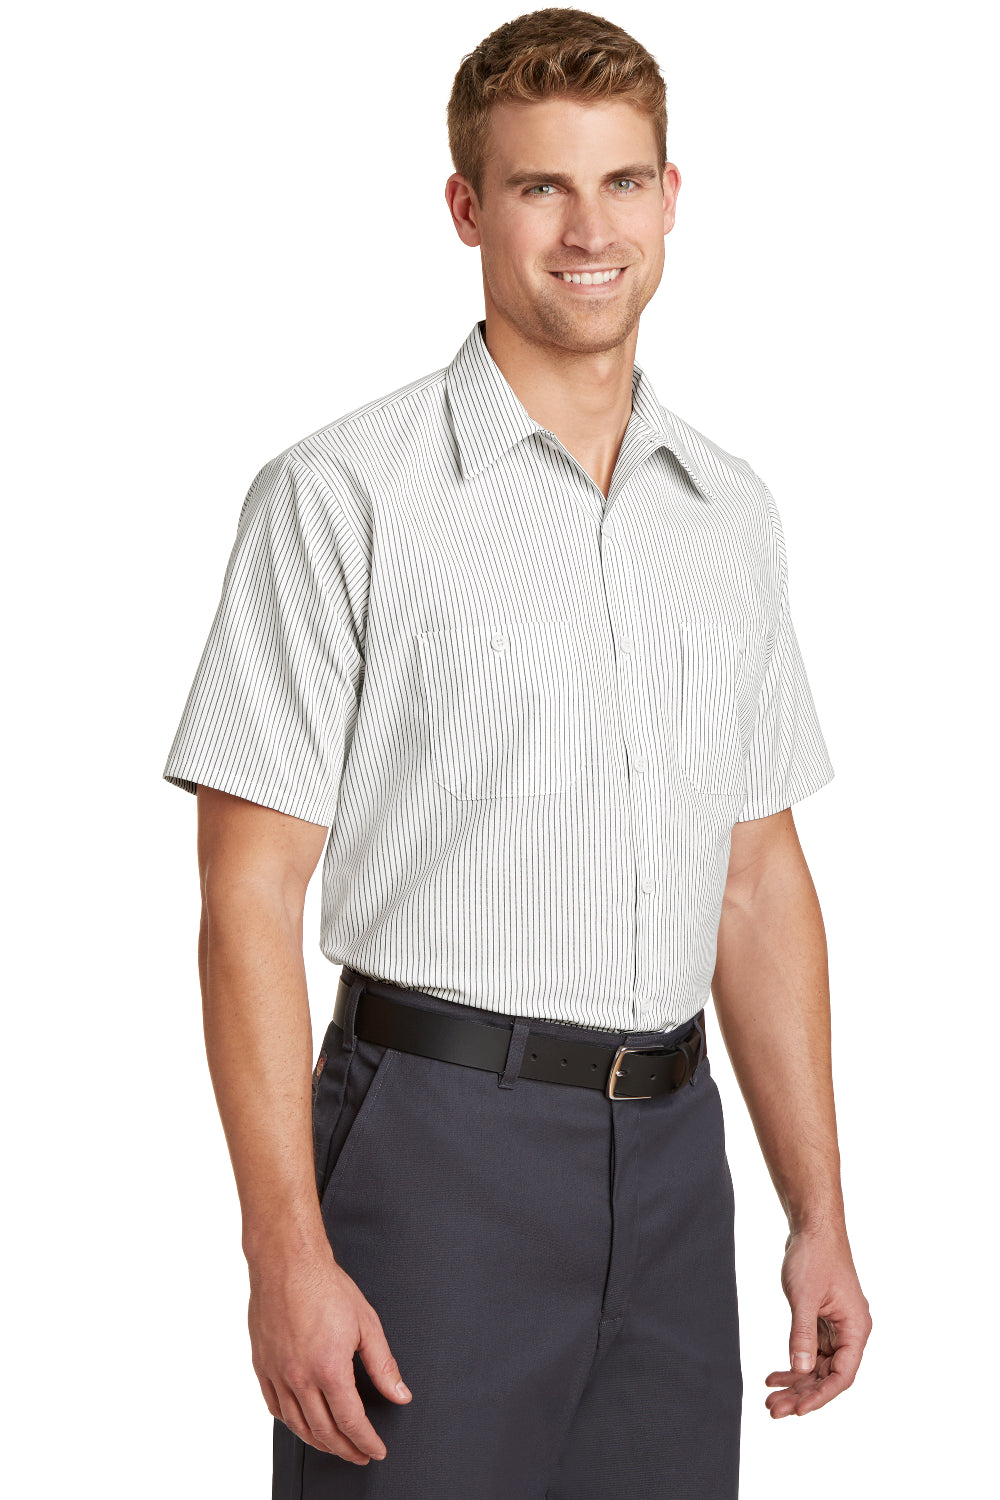 Red Kap CS20/CS20LONG Mens Industrial Moisture Wicking Short Sleeve Button Down Shirt w/ Double Pockets Grey/White 3Q